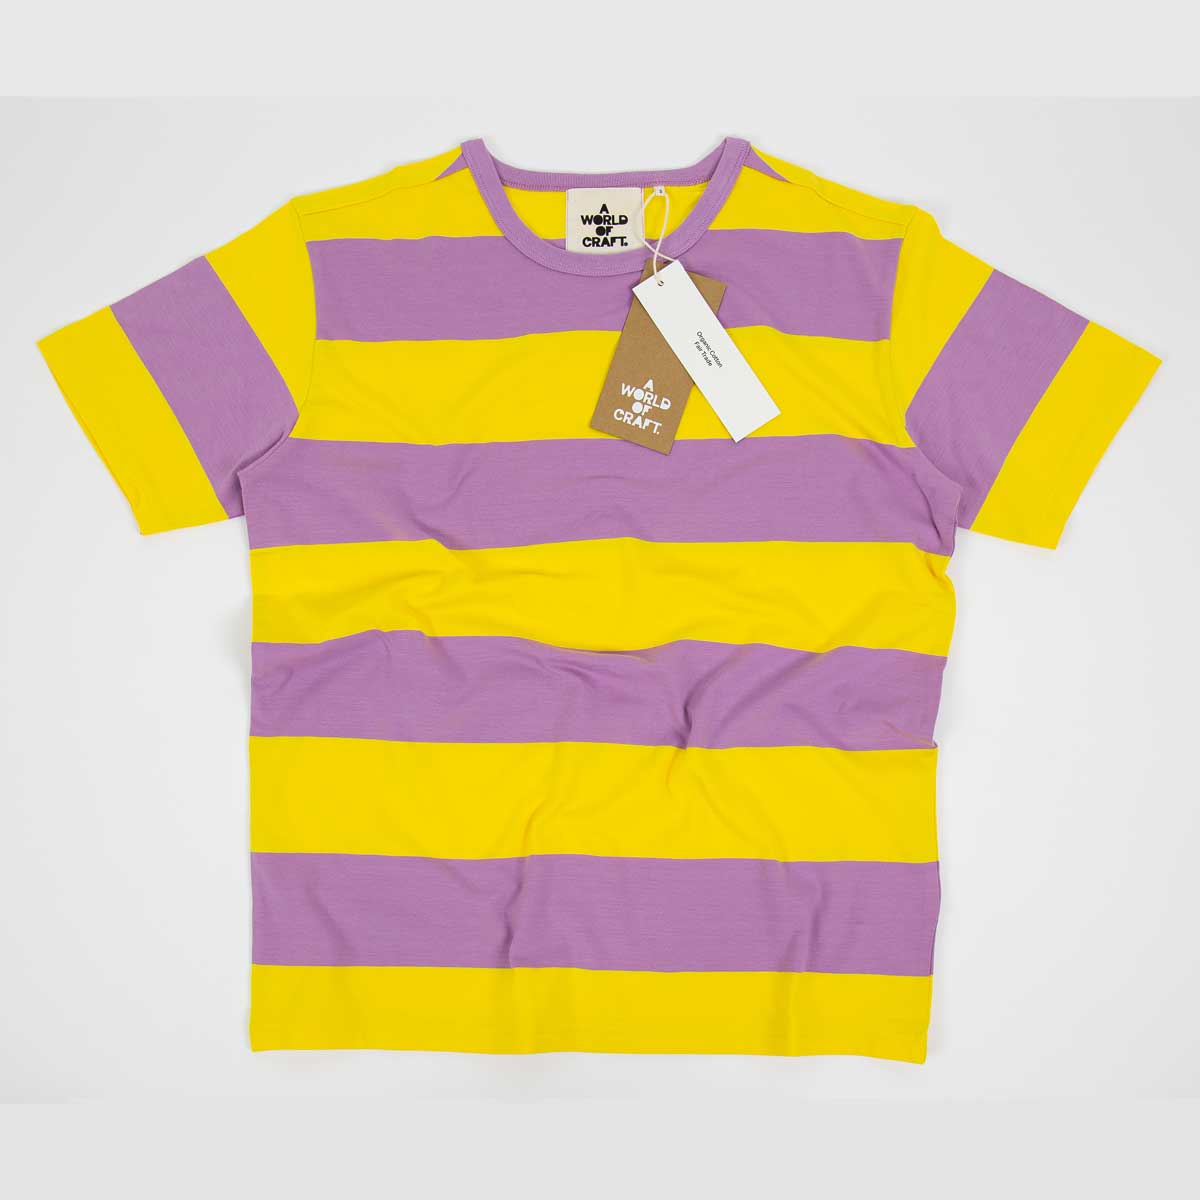 AWOC Men T-shirt, short sleeve, yellow/lilac